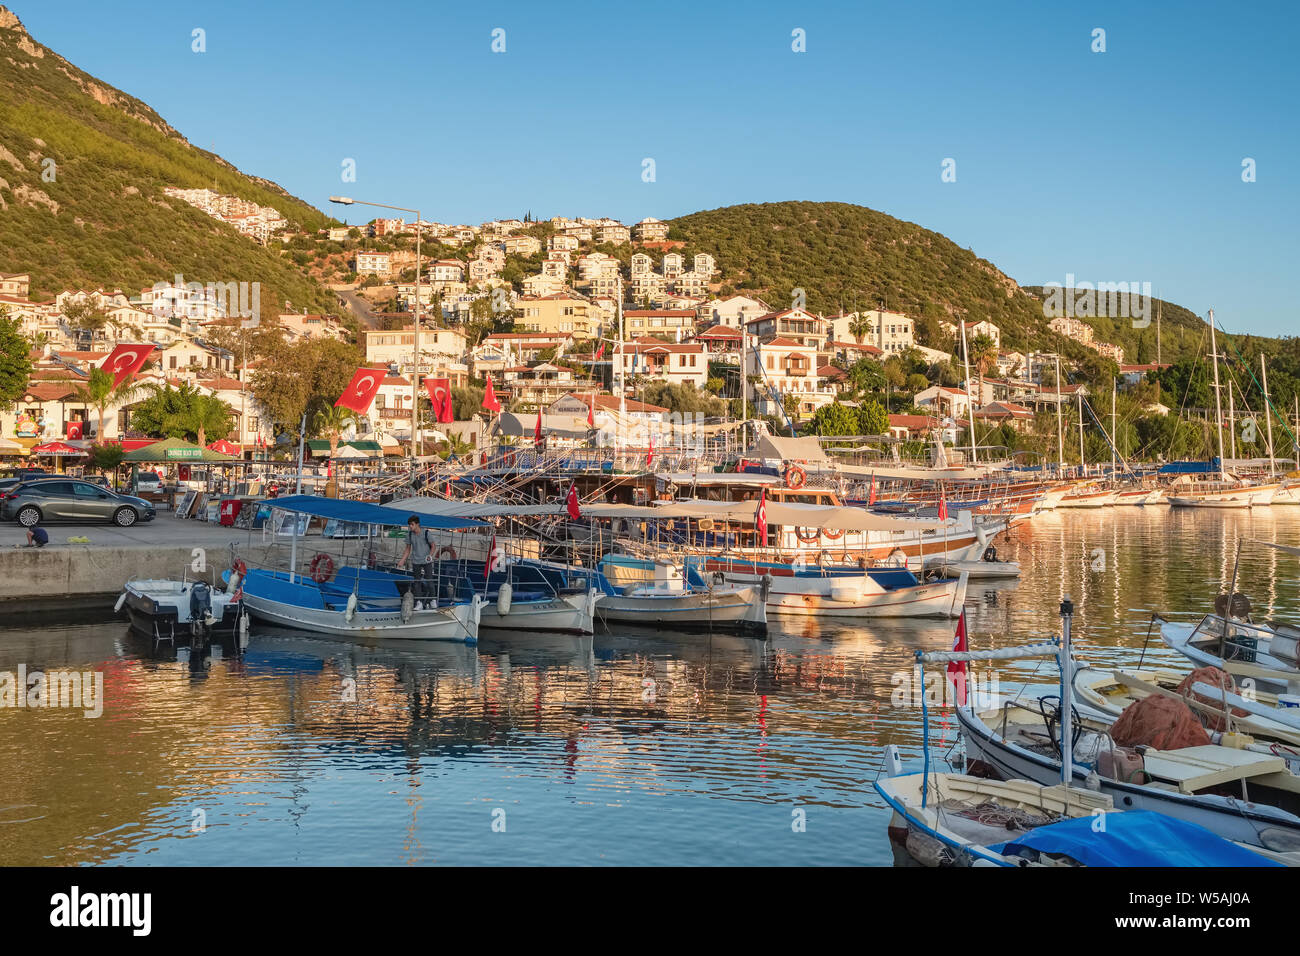 Kas, Turket - 6 Novembre 2018: bellissima cittadina mediterranea Kas al tramonto, Turchia. Le barche nel porto di Kas Foto Stock